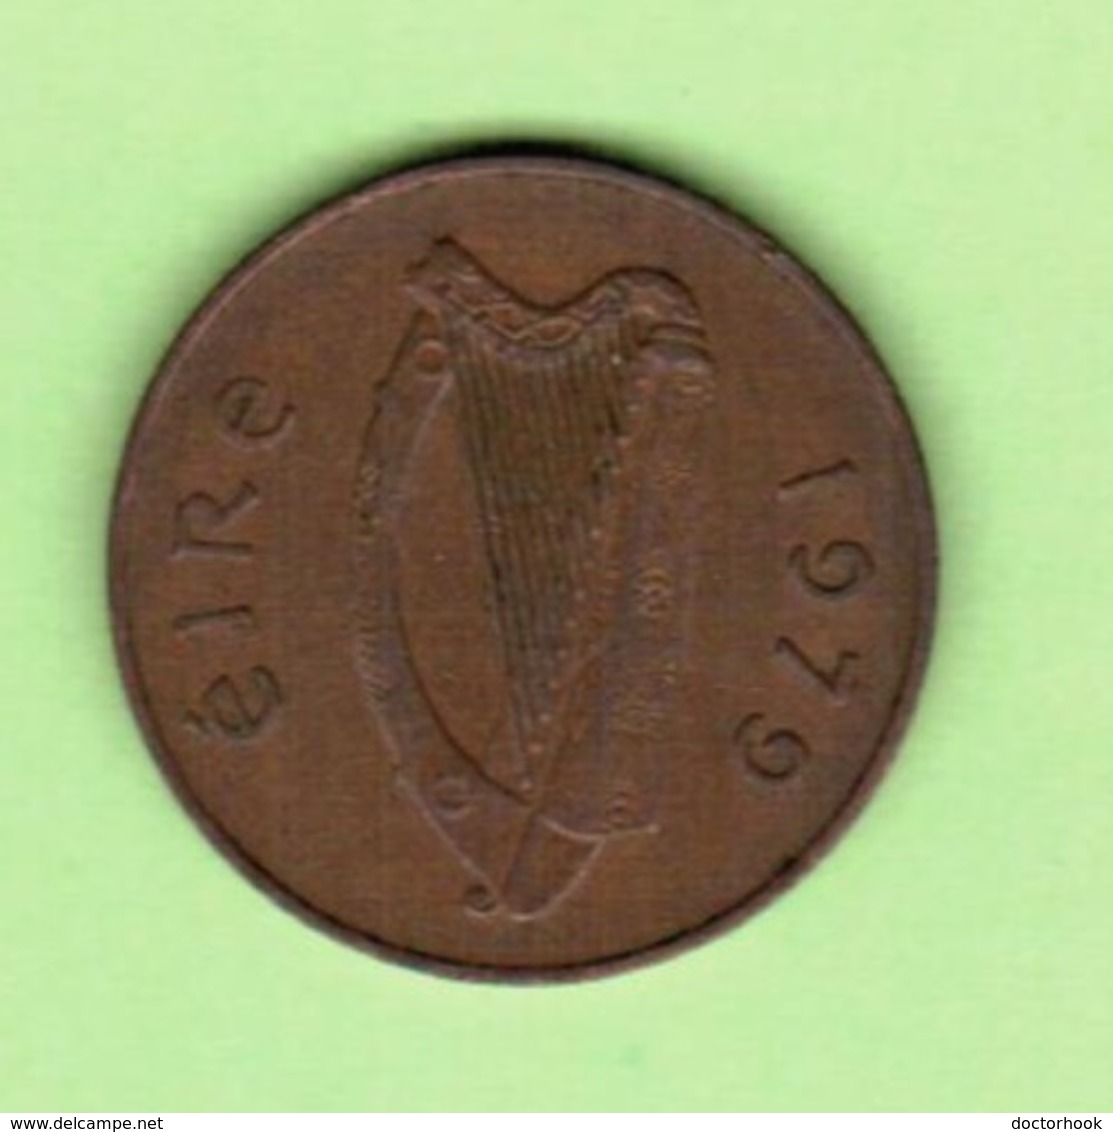 IRELAND   2 PENCE 1979  (KM # 21) #5212 - Irland